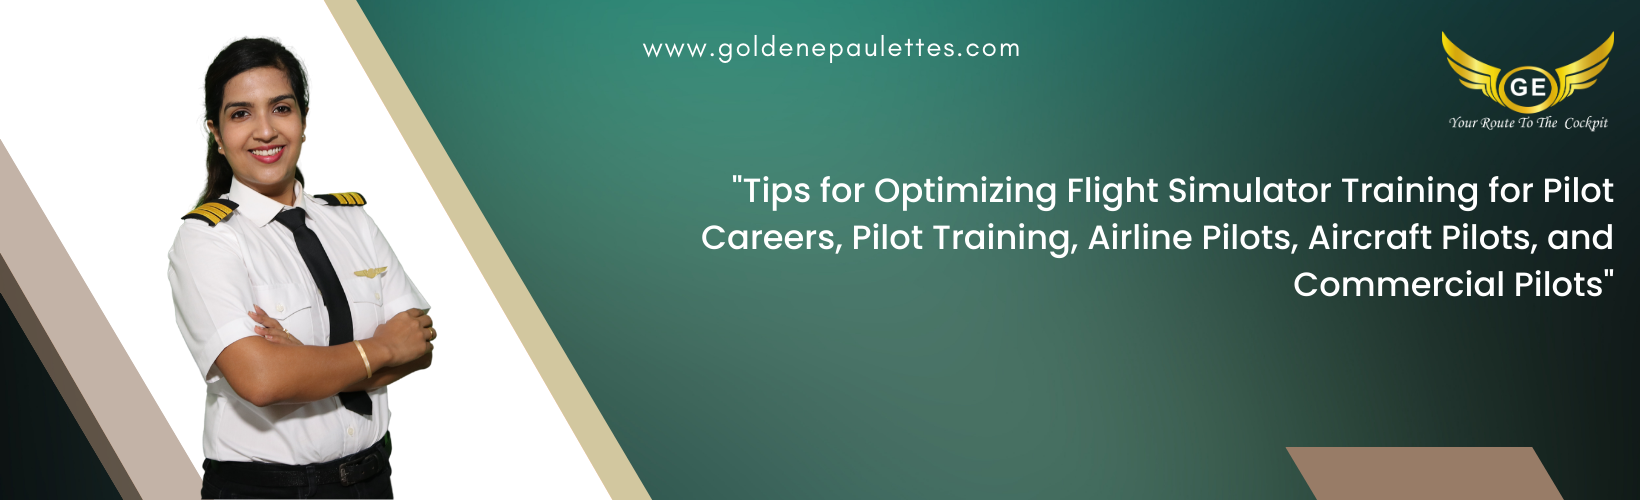 Tips for Optimizing Flight Simulation Training